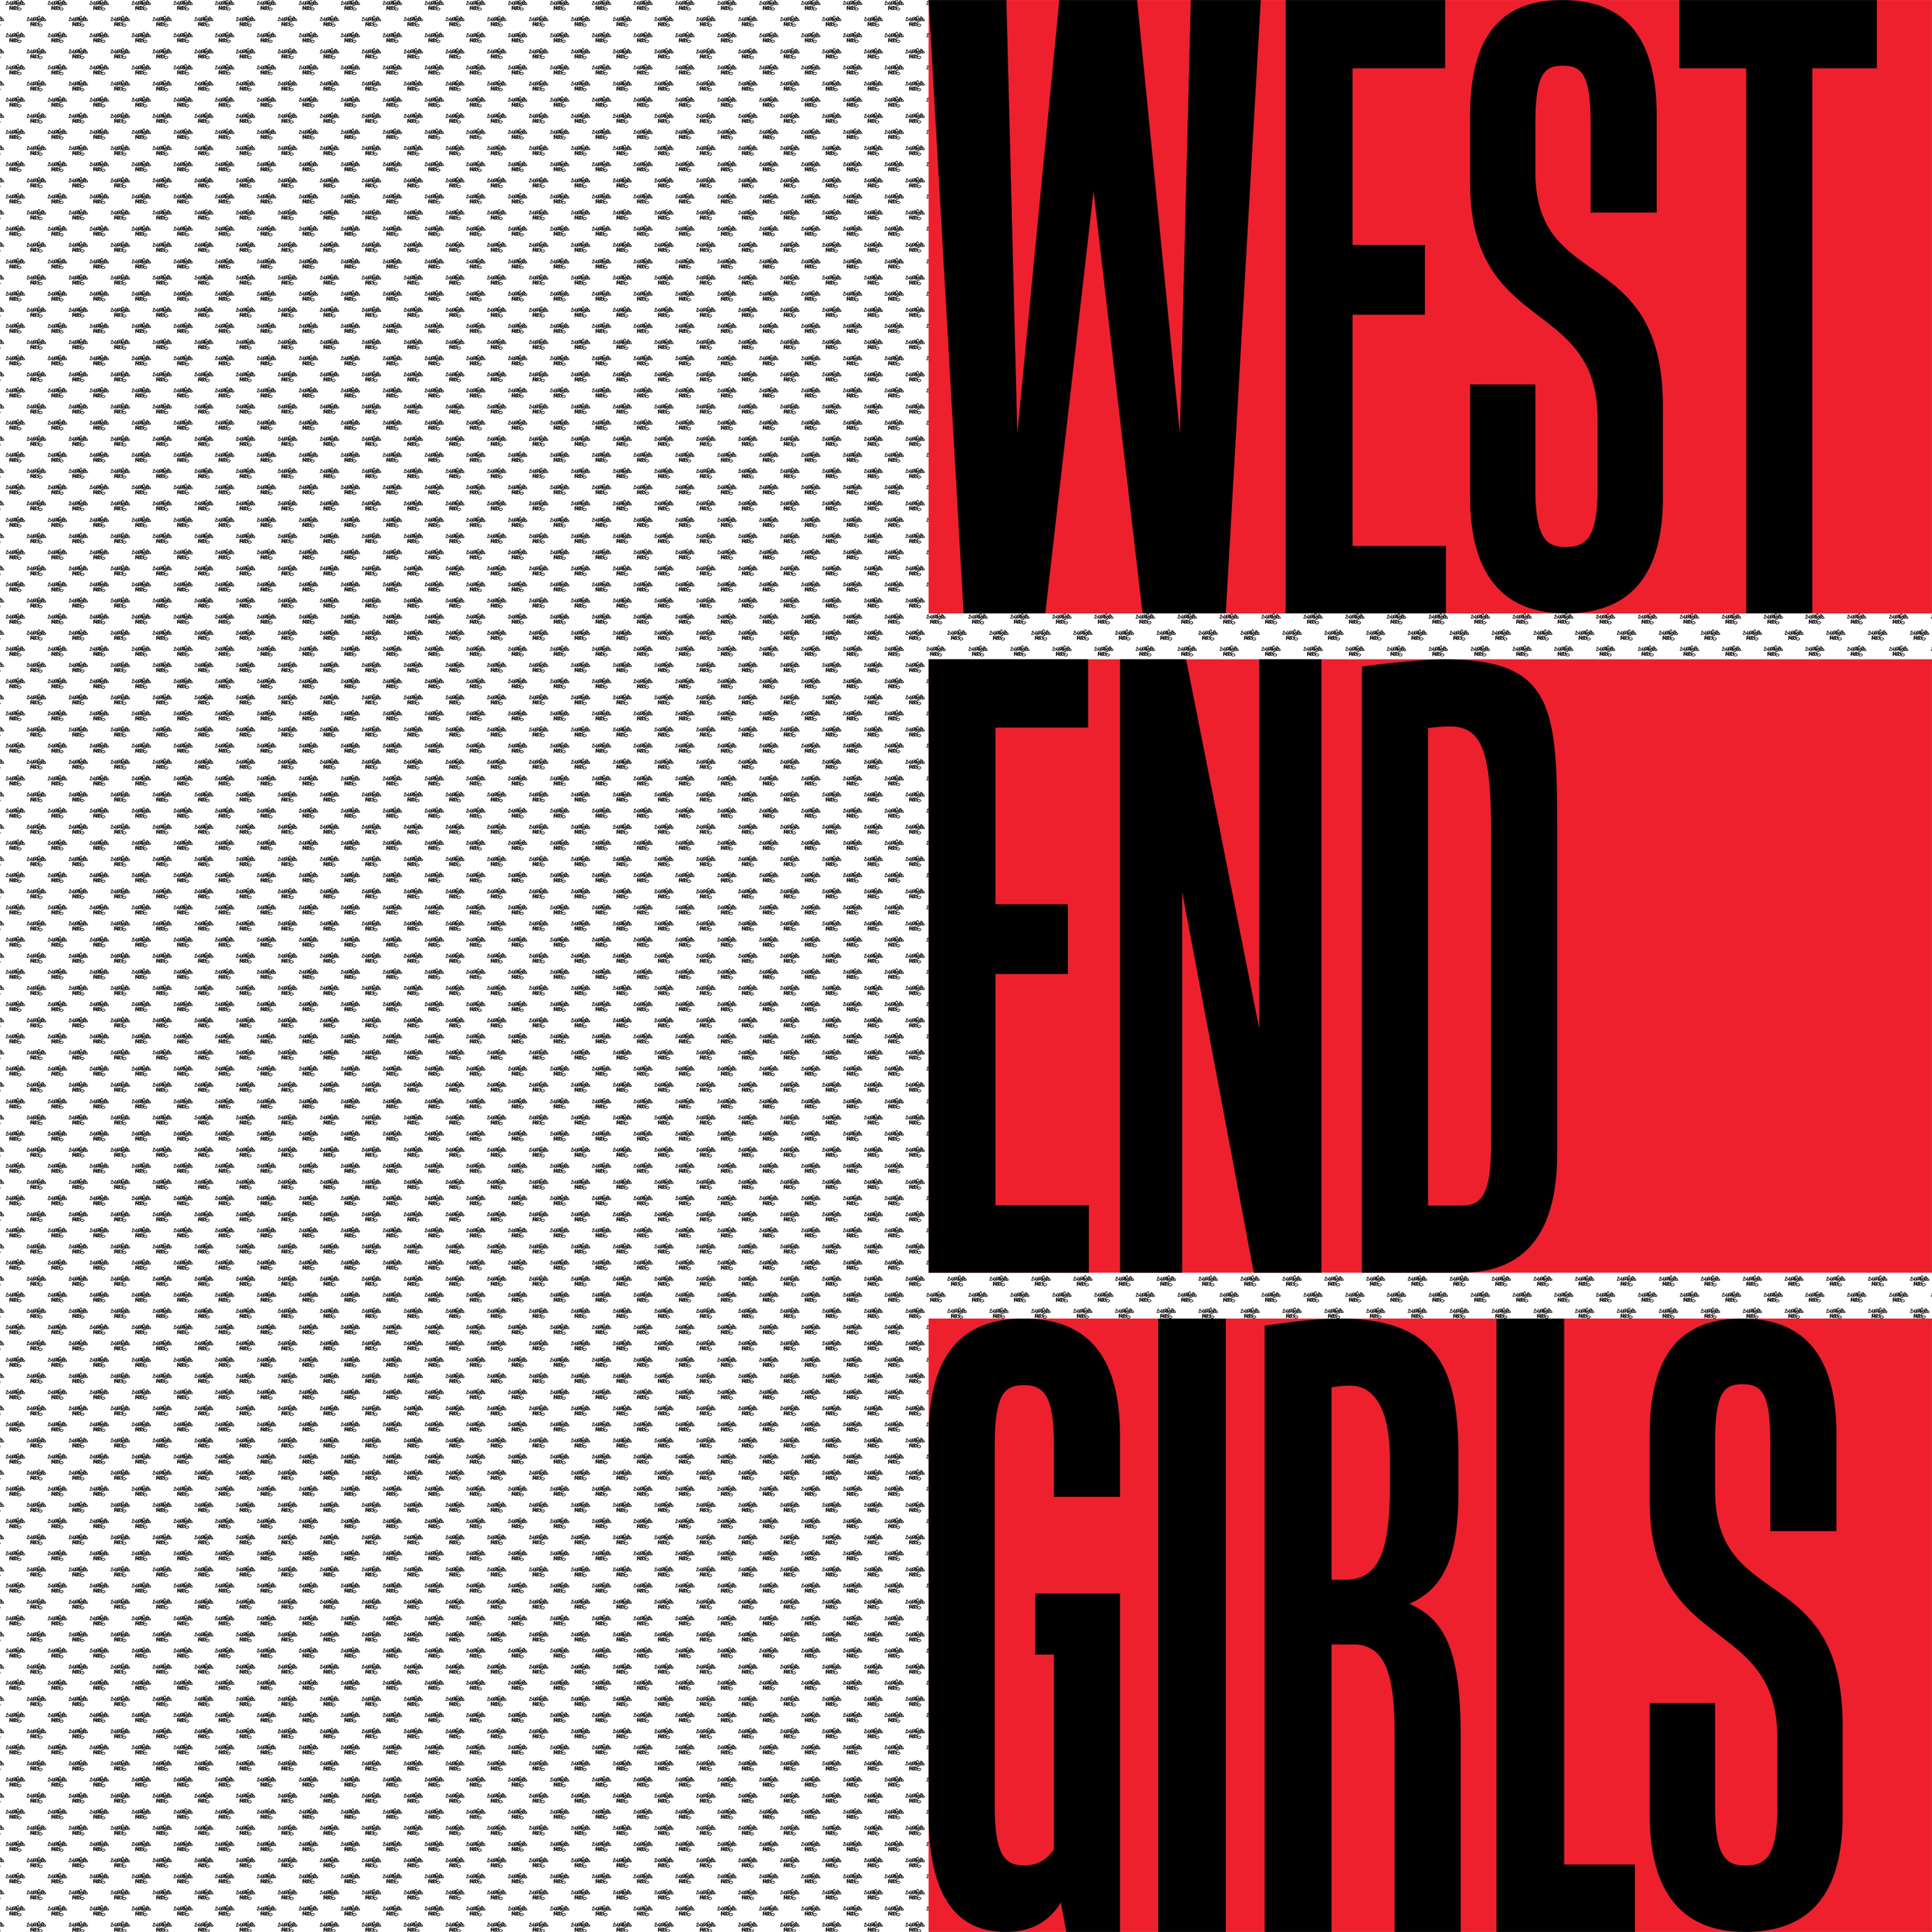 Sleaford Mods - West End Girls: Limited Vinyl 12" Single